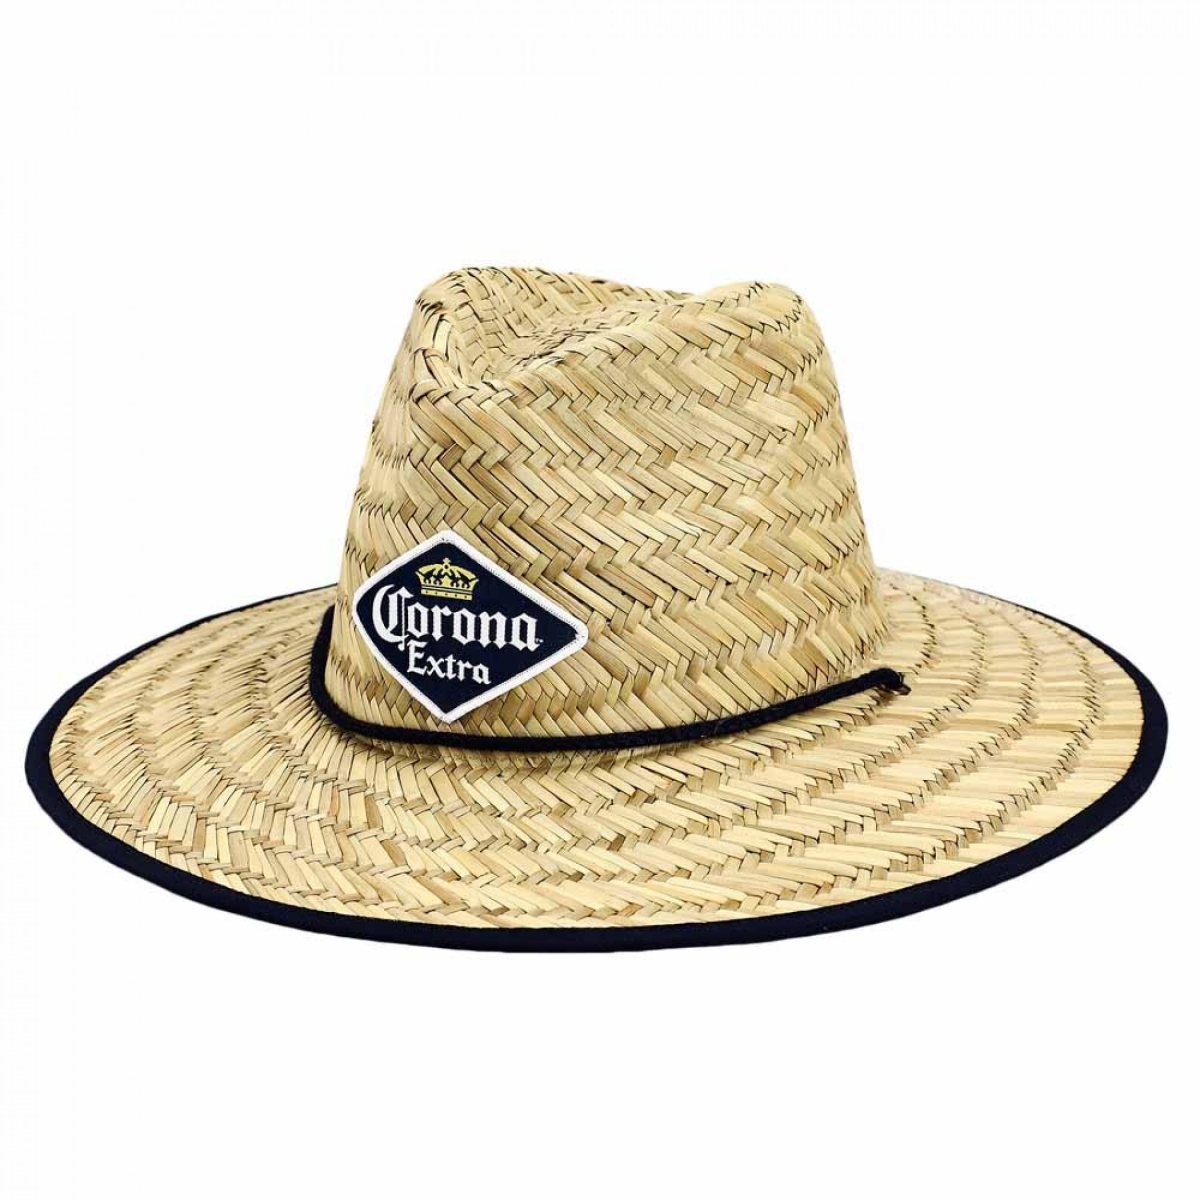 Picture of Corona Extra 830897 Corona Extra Patch Straw Lifeguard Beach Sun Hat